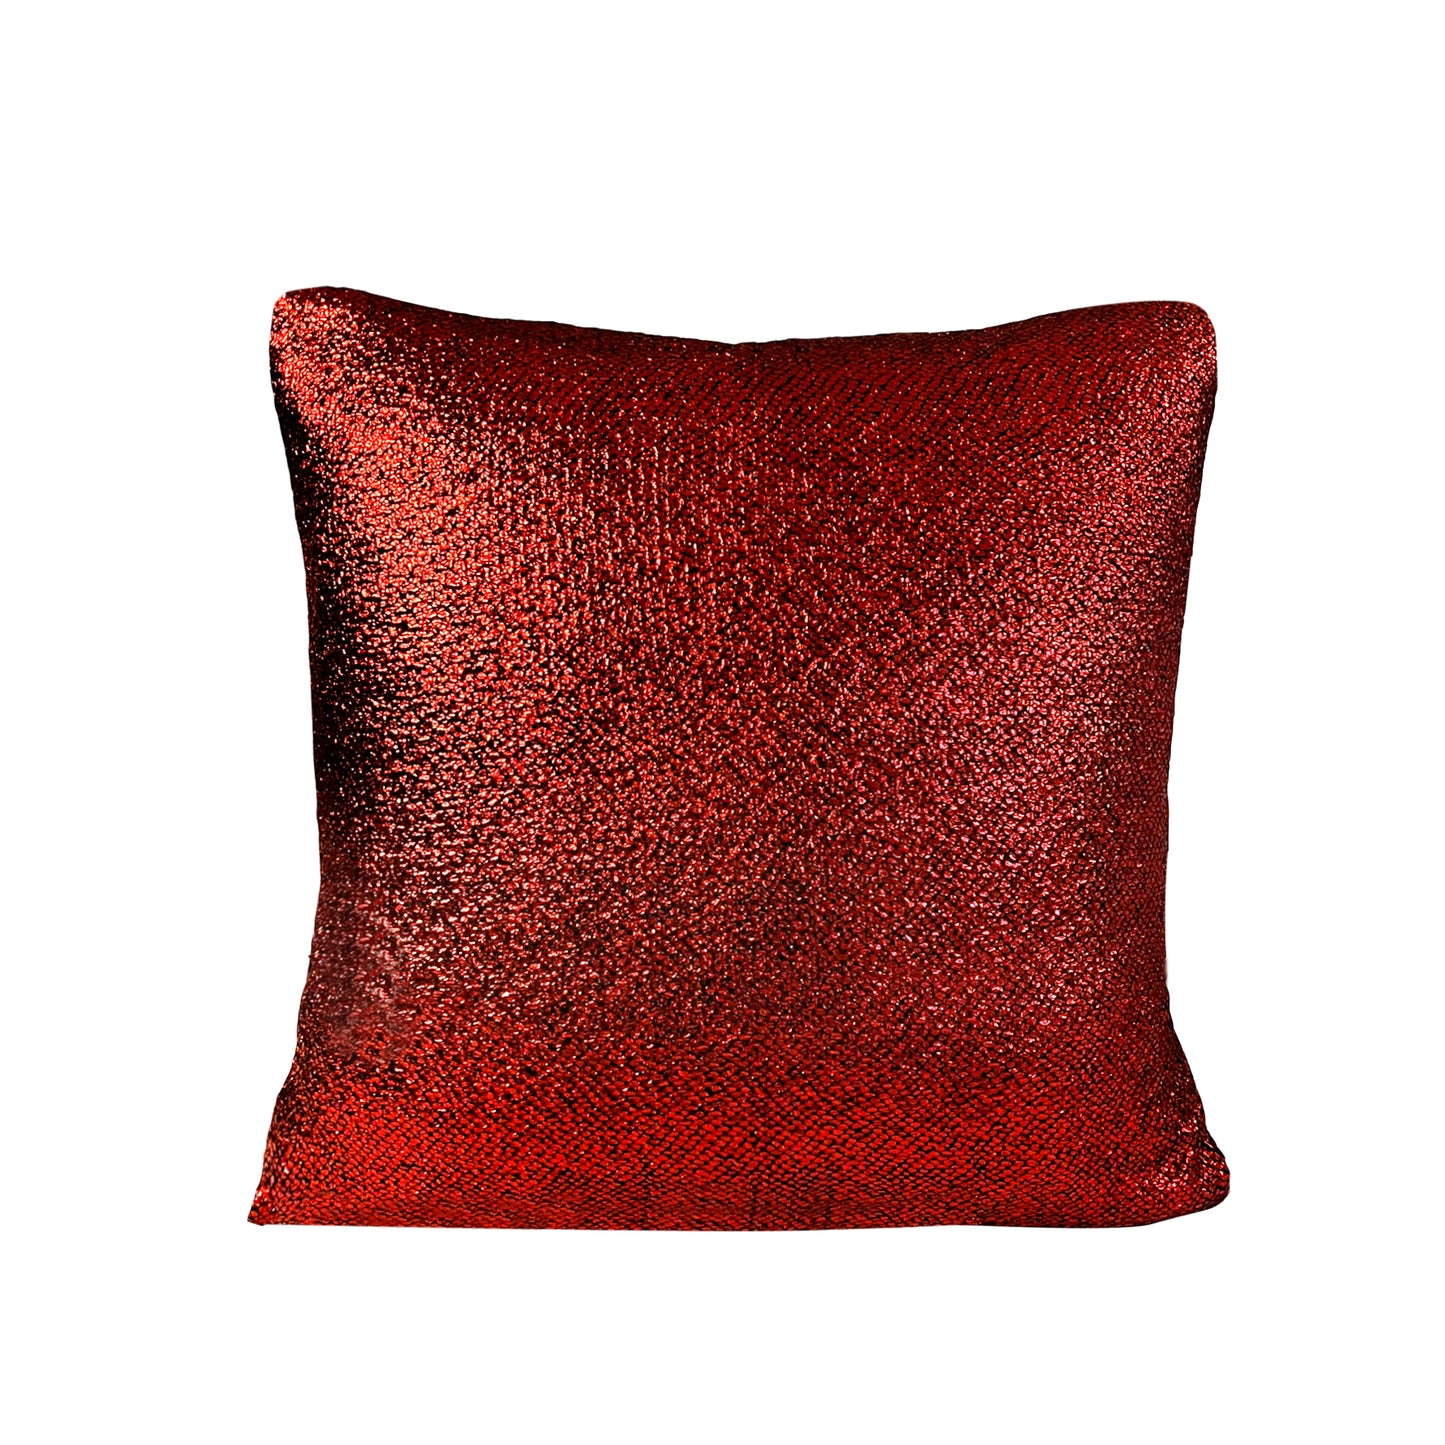 Marvelous Sparkle Pattern Decorative Accent Throw Pillow Cover